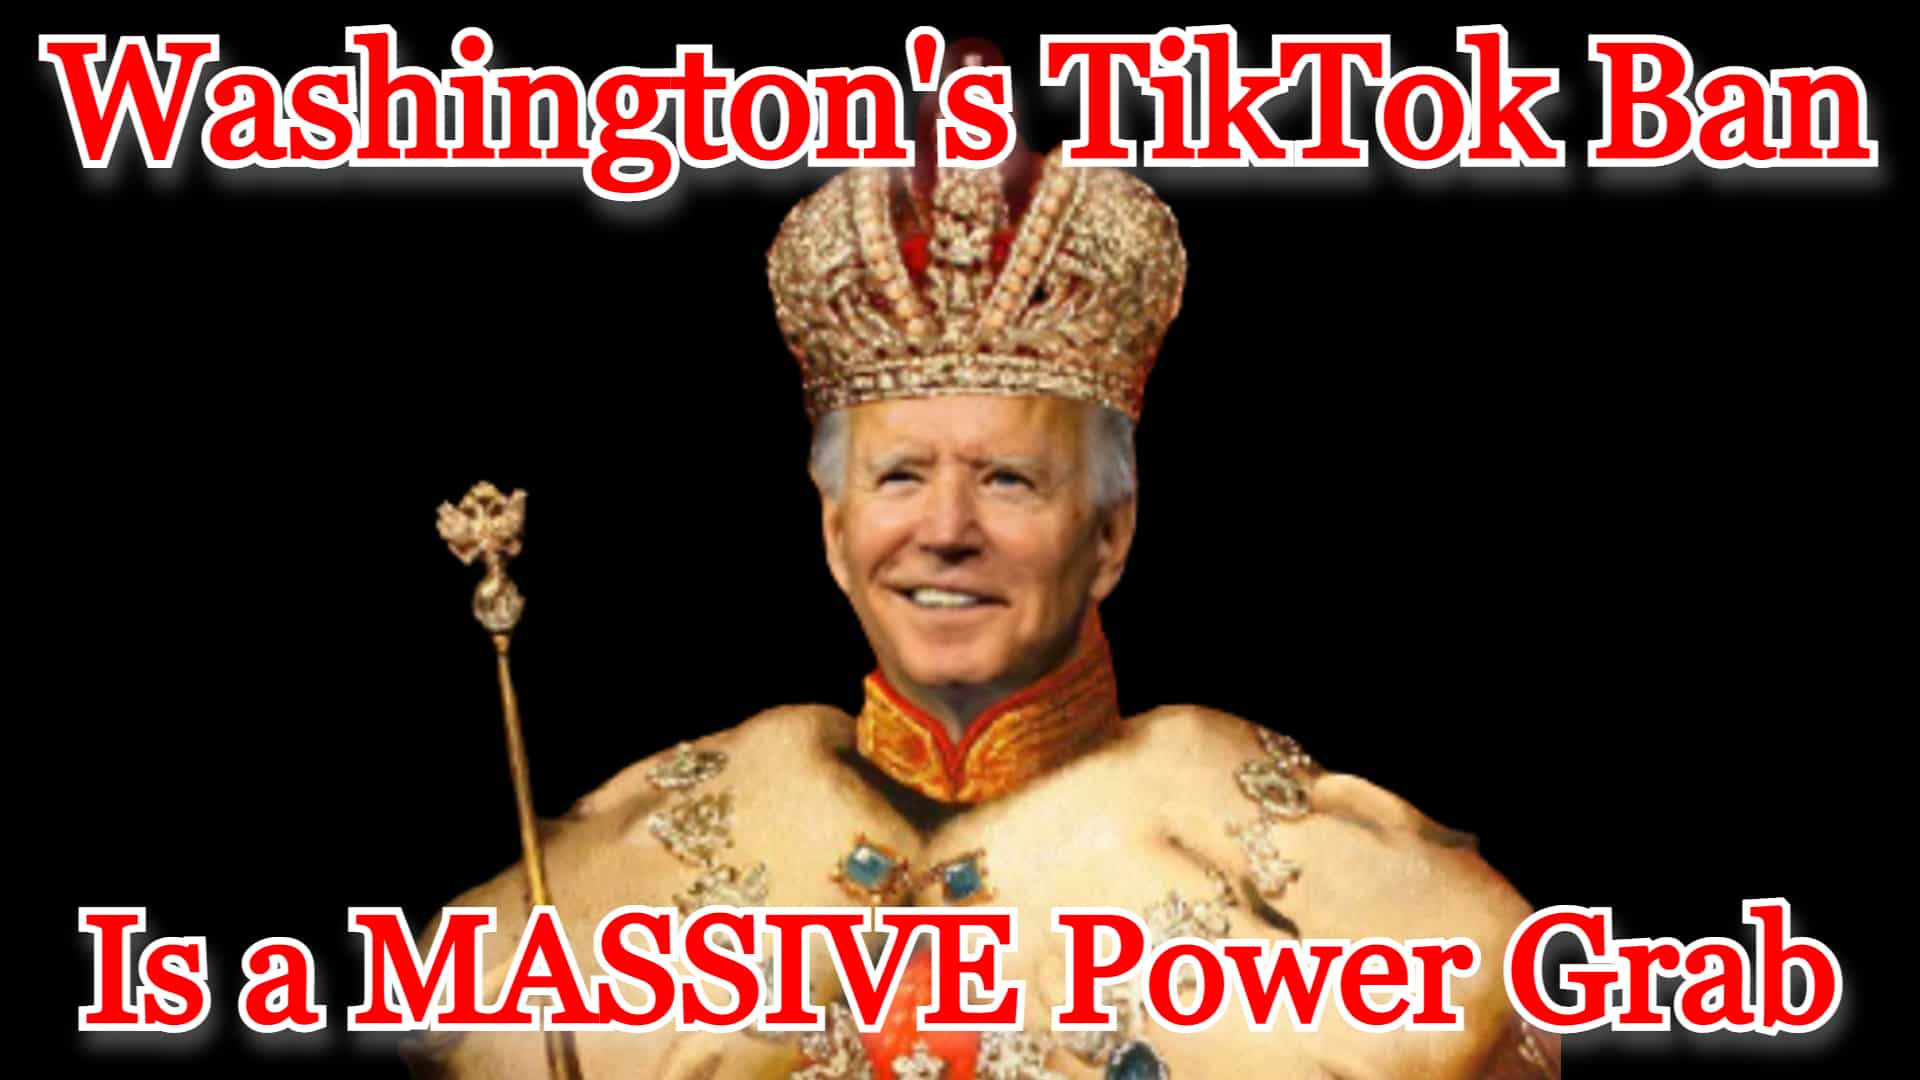 COI #402: Washington’s TikTok Ban Is a MASSIVE Power Grab